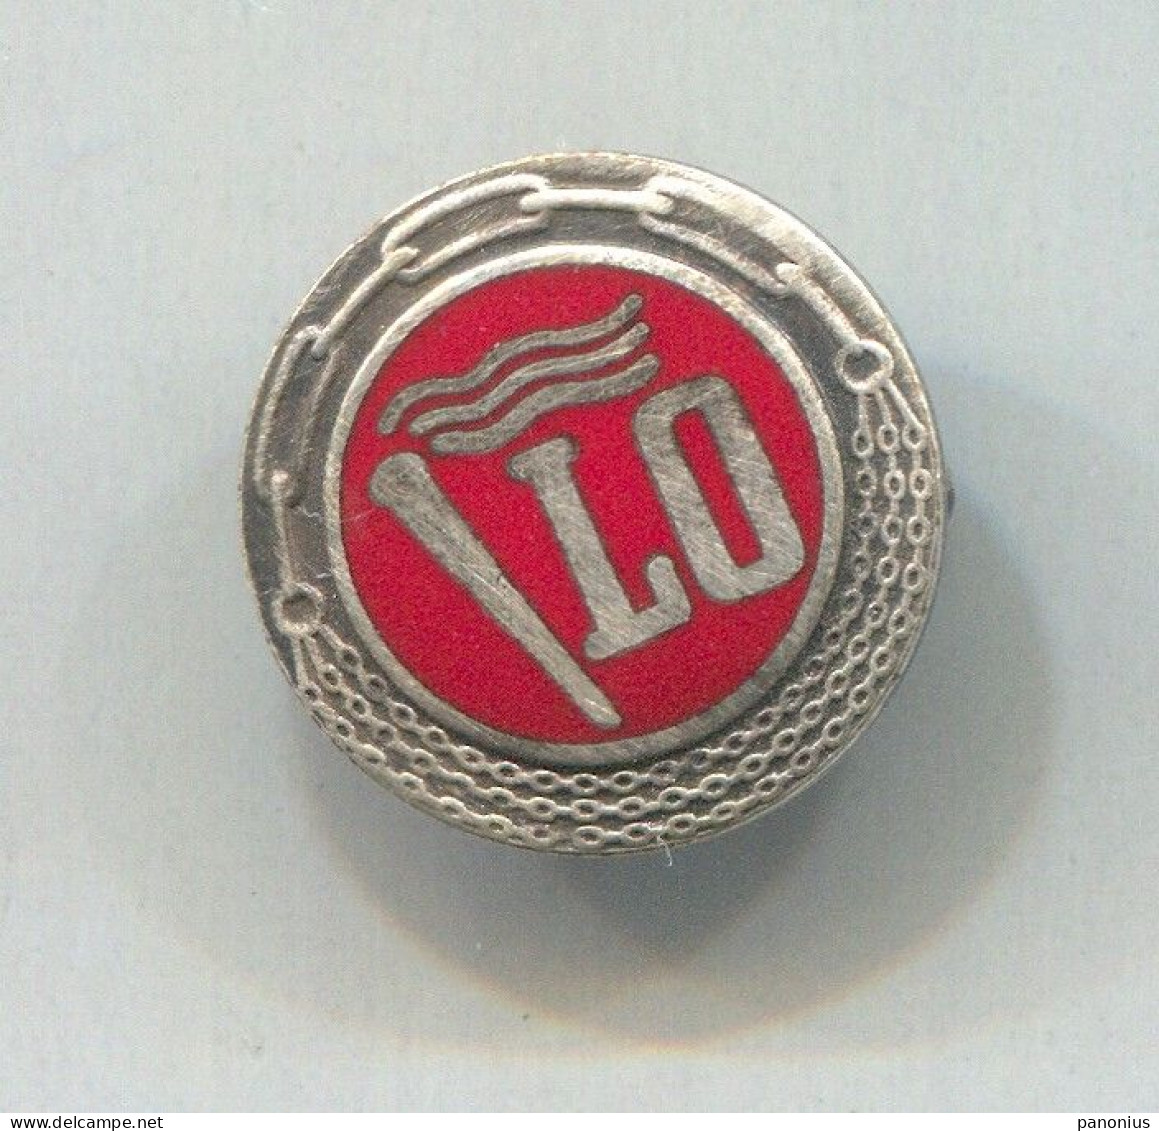 LO Norway - Labour Party, Vintage Pin Badge Abzeichen, Enamel - Vereinswesen